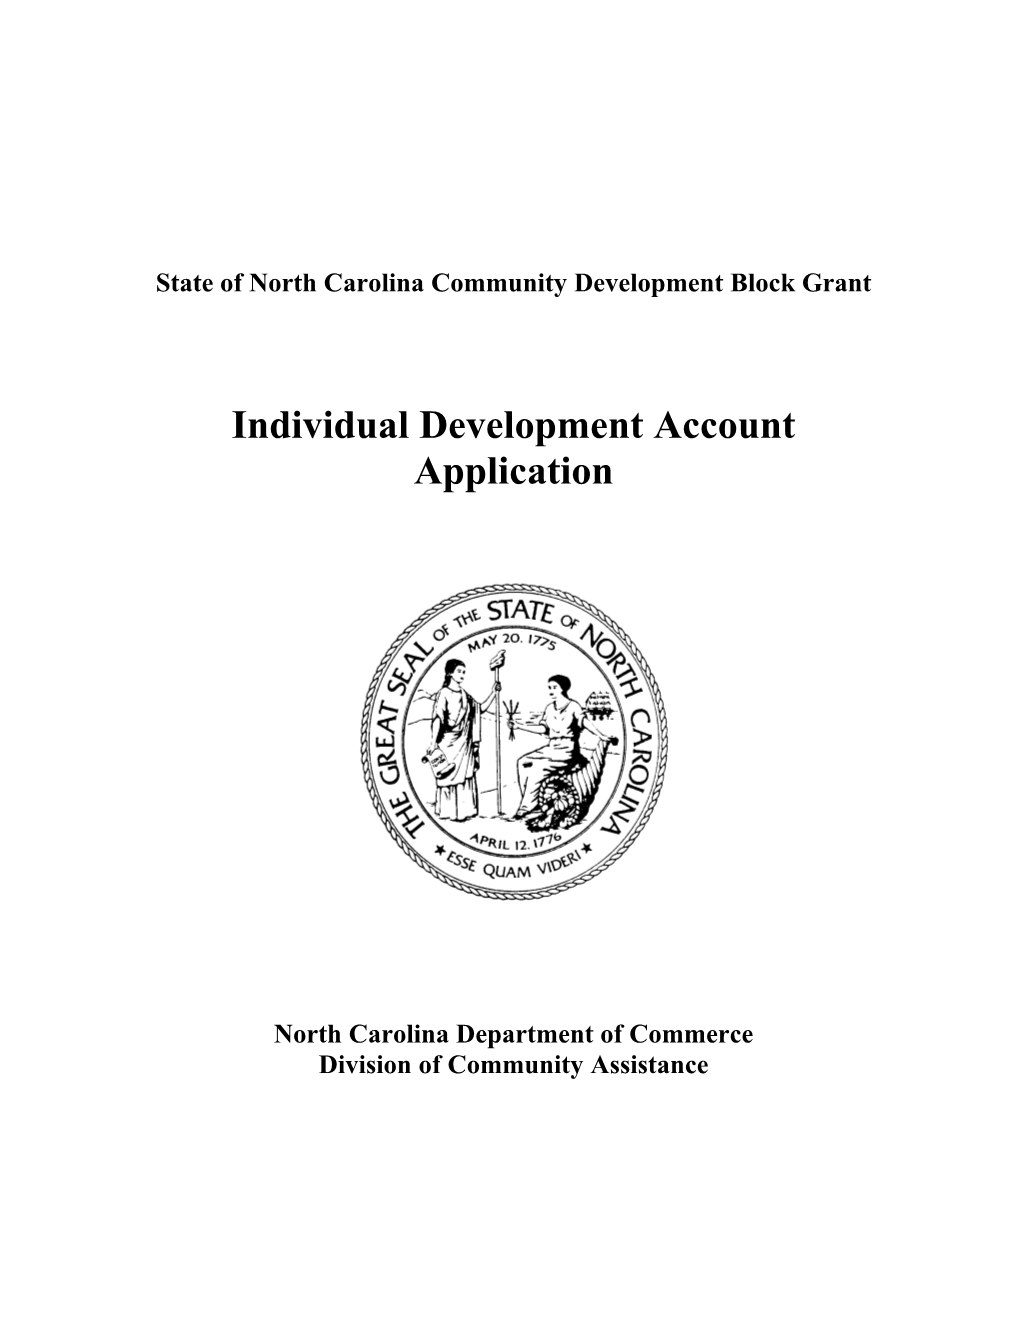 Individual Development Accounts Program